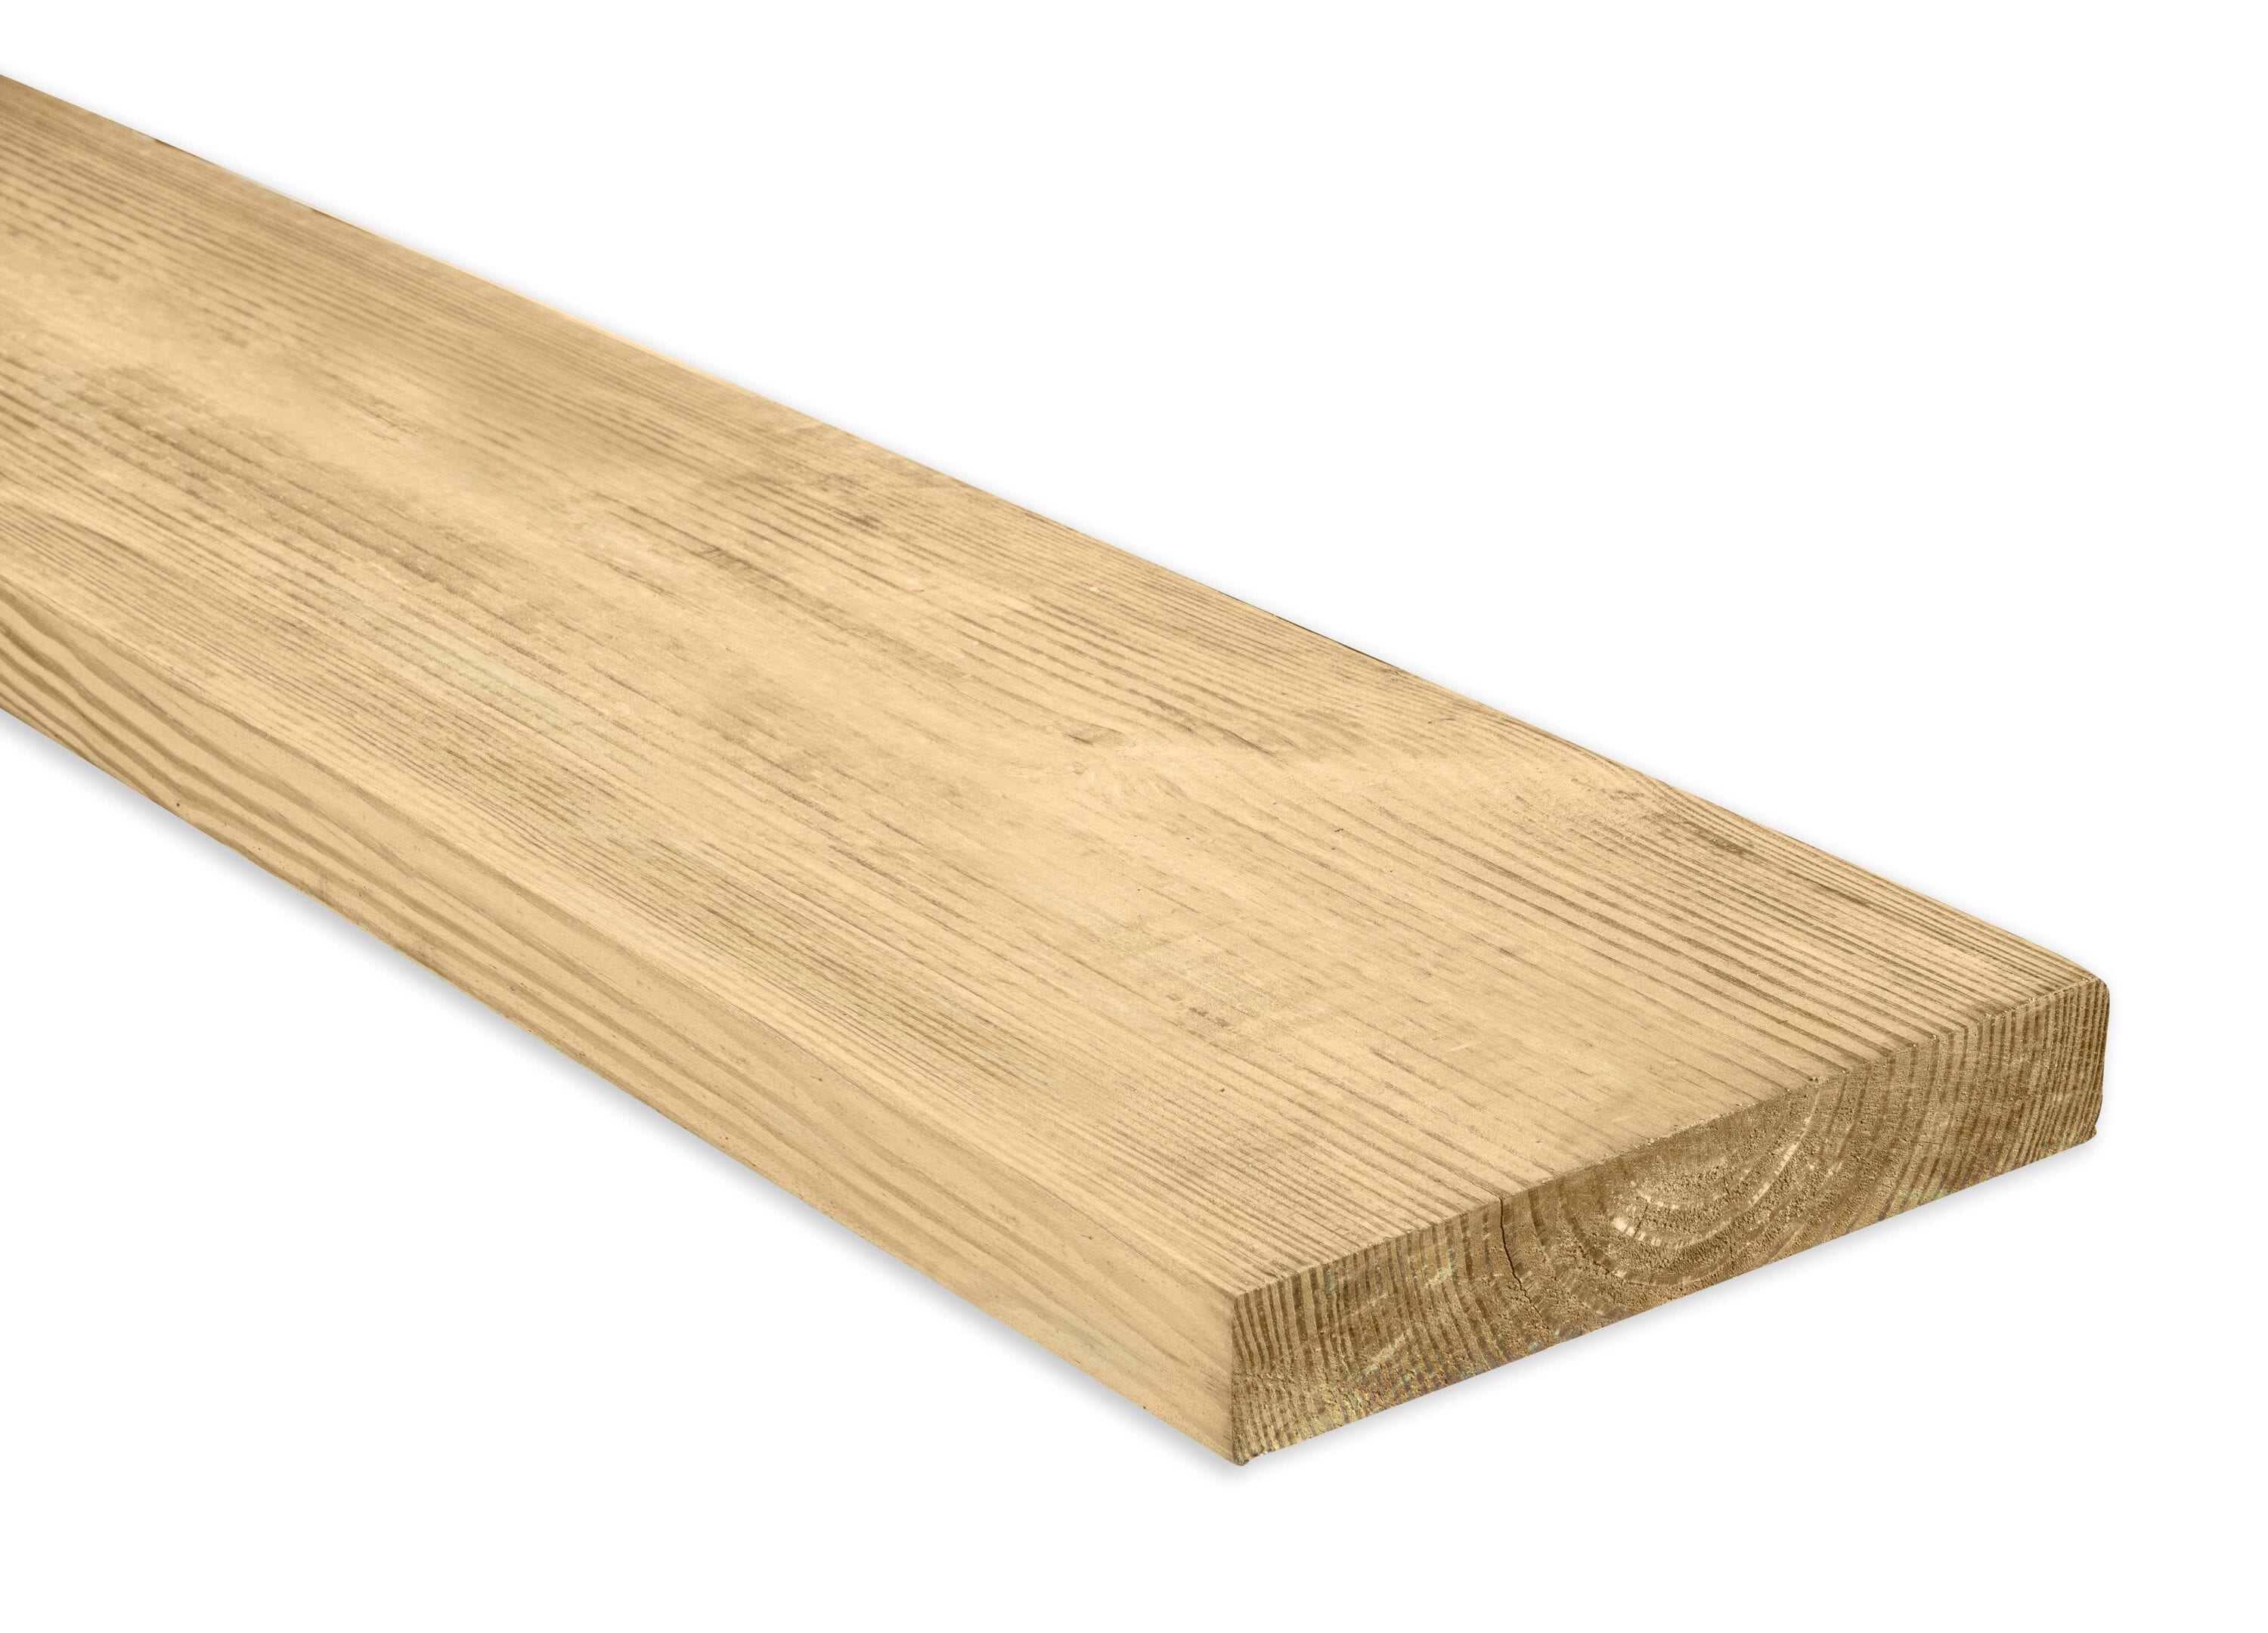 Buy Wood Weathering Set online for 11,25€